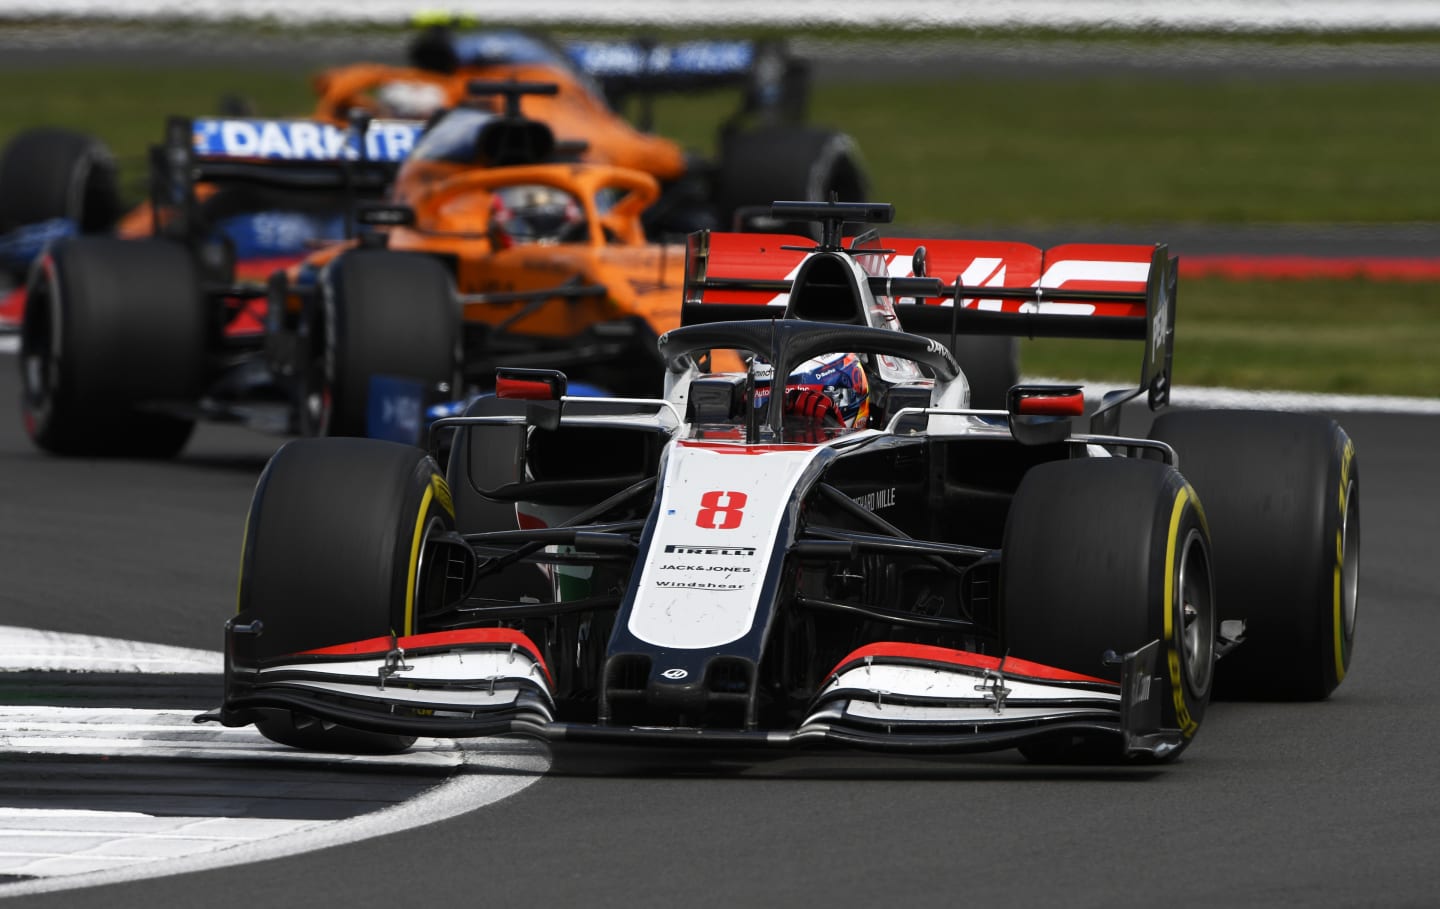 NORTHAMPTON, ENGLAND - AUGUST 02: Romain Grosjean of France driving the (8) Haas F1 Team VF-20